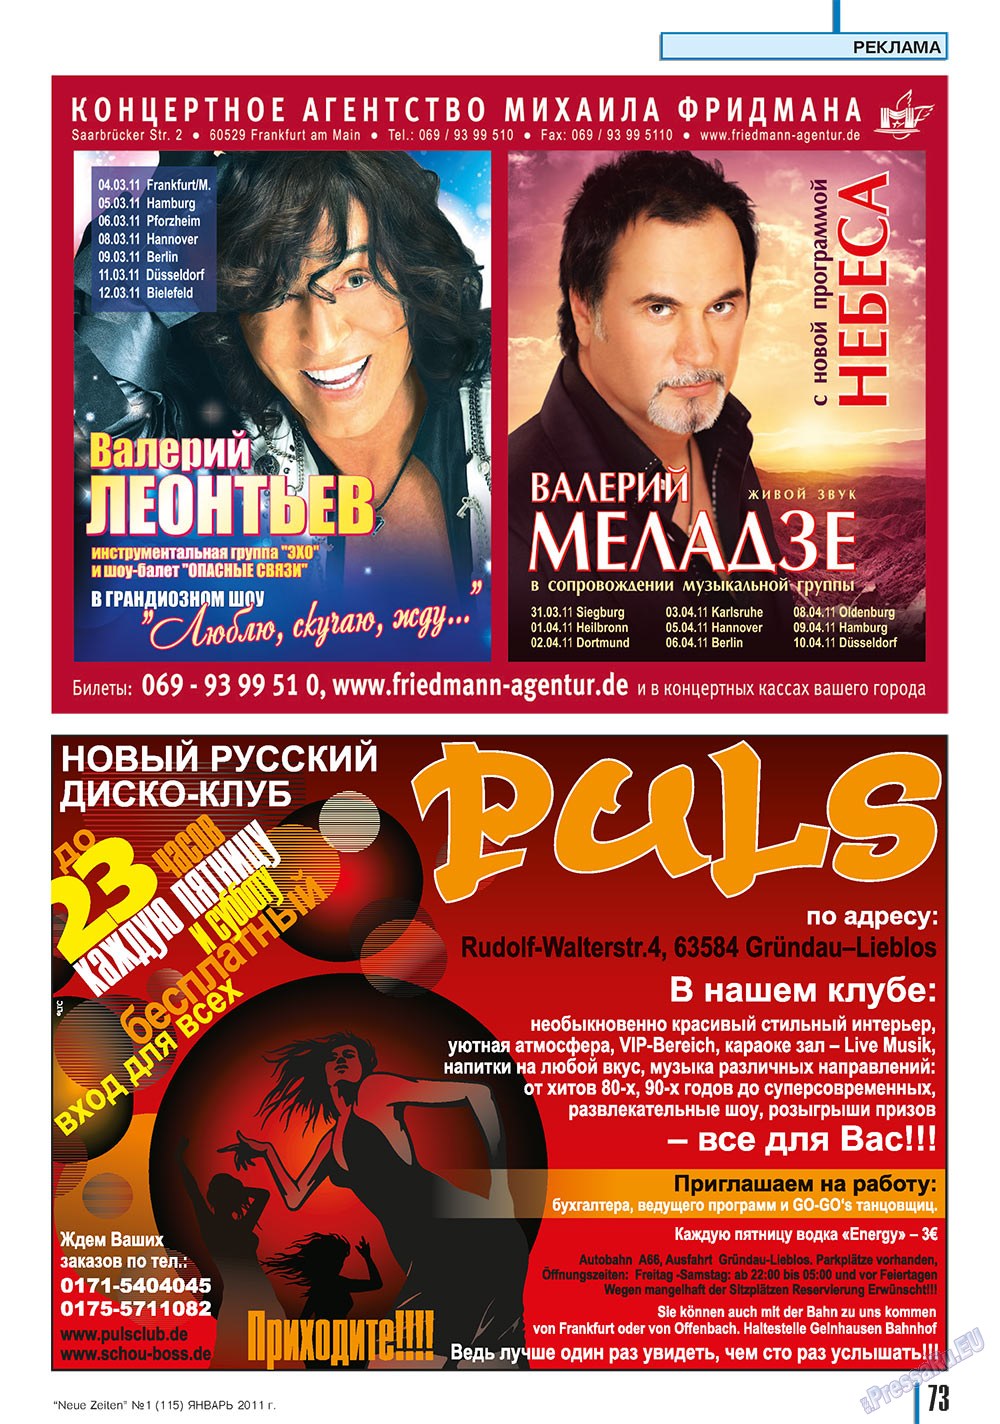 Neue Zeiten (журнал). 2011 год, номер 1, стр. 75